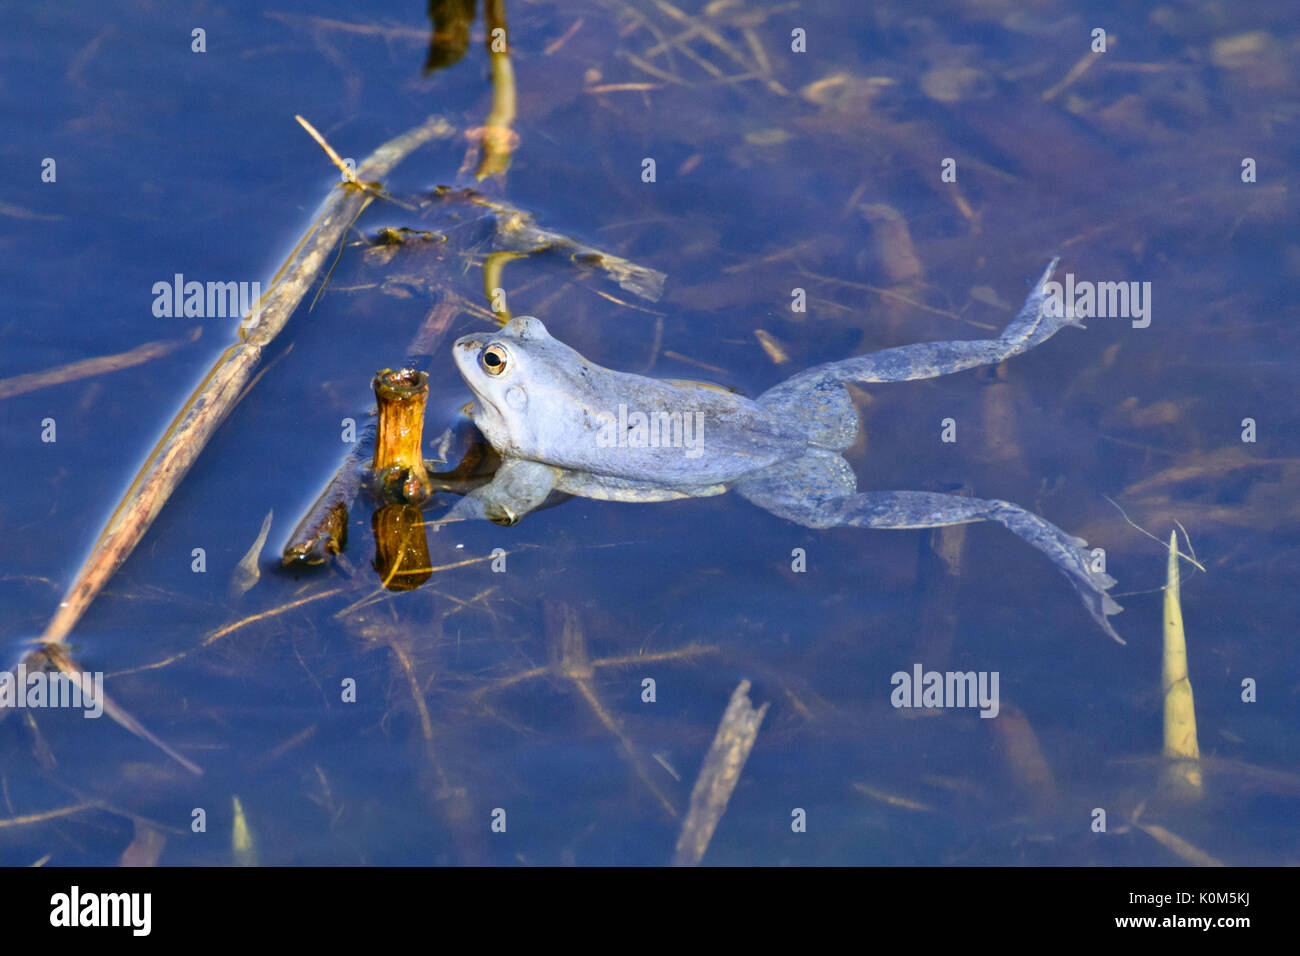 Moor frog (Rana arvalis), blue-coloured male during spawning season, Brandenburg, Germany Stock Photo